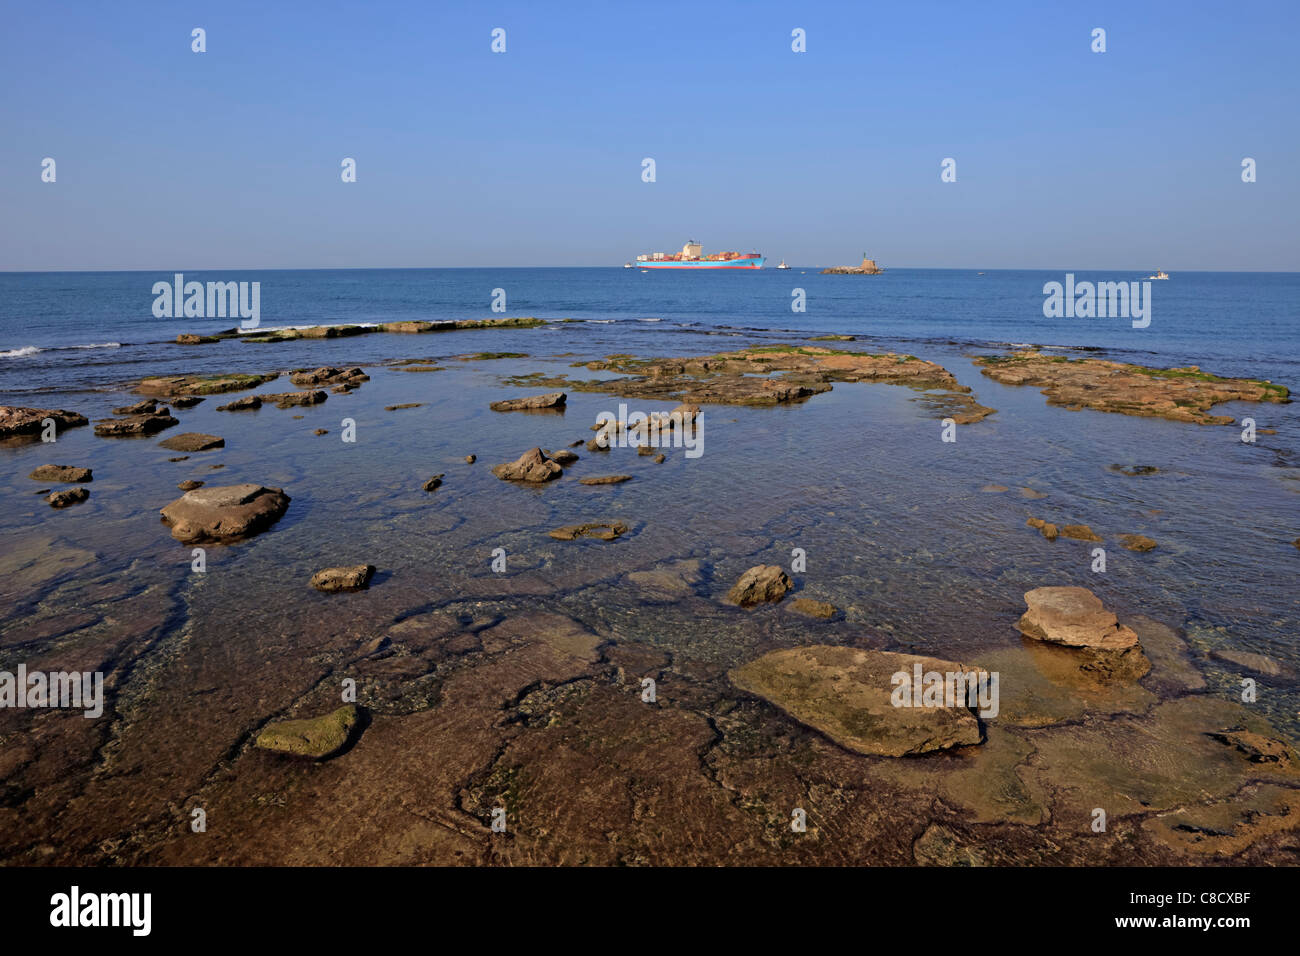 The archipelago of Livorno in the Mediterranean Stock Photo